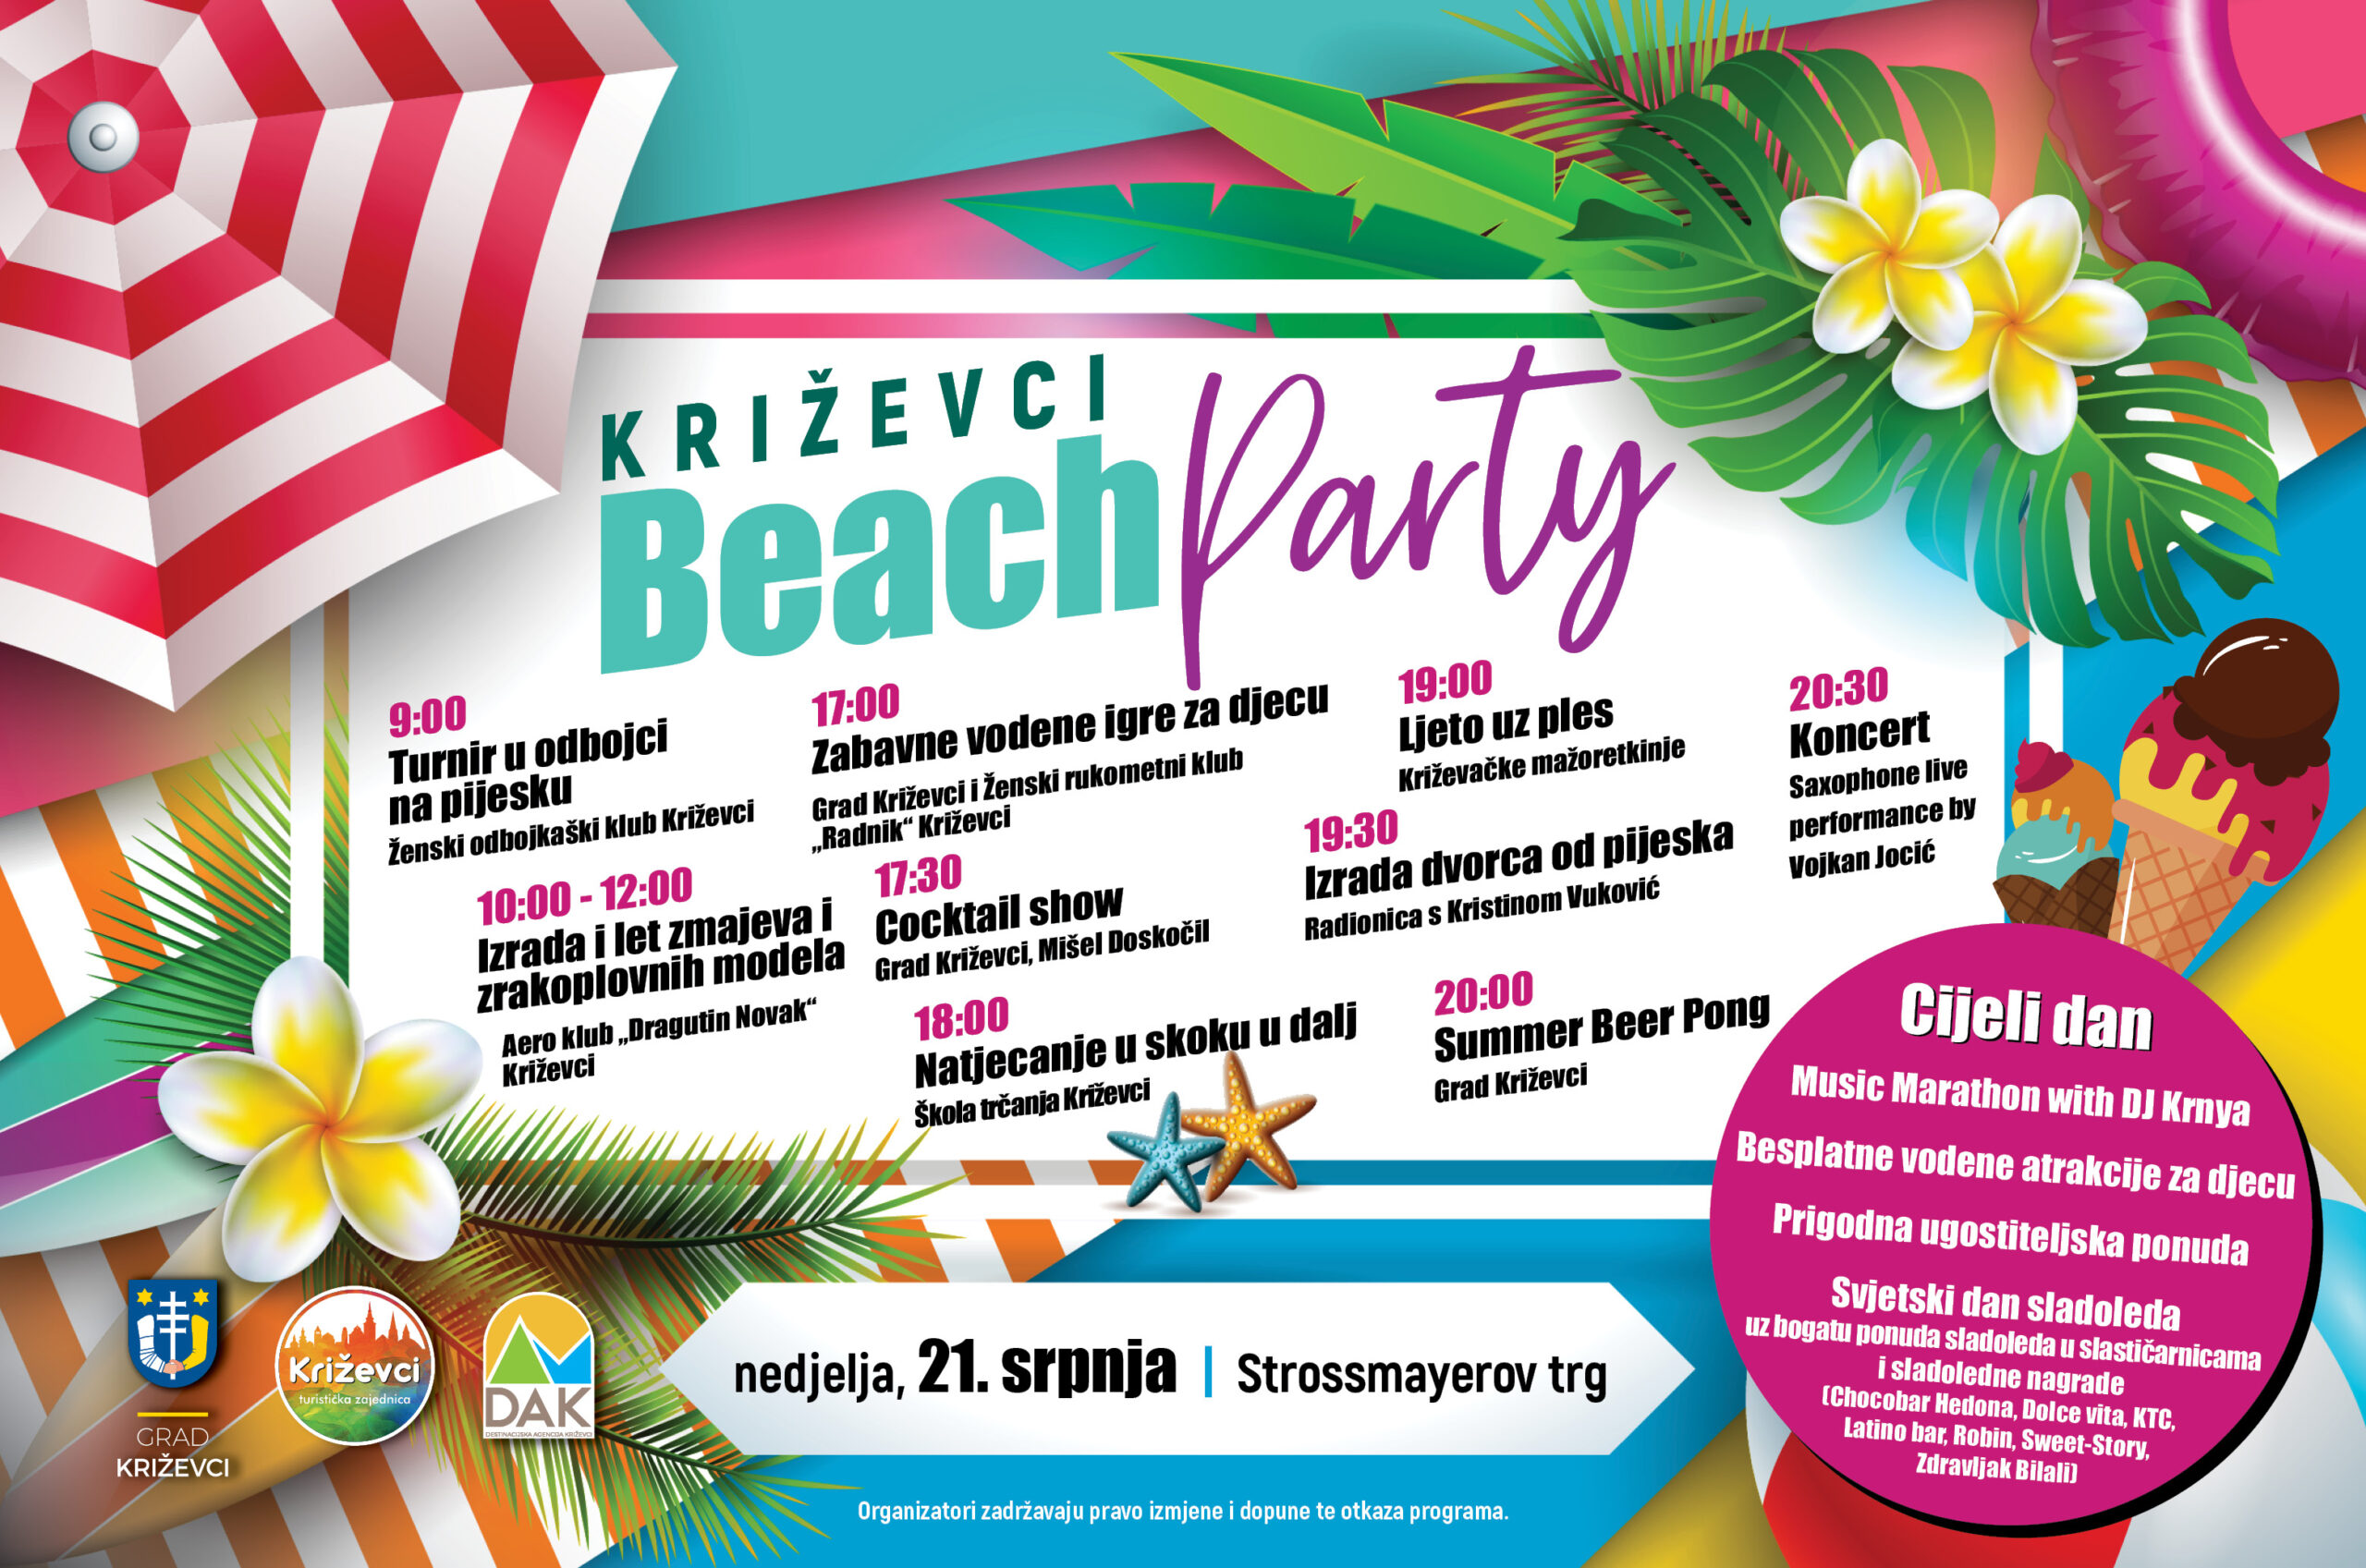 krizevci-beach-party